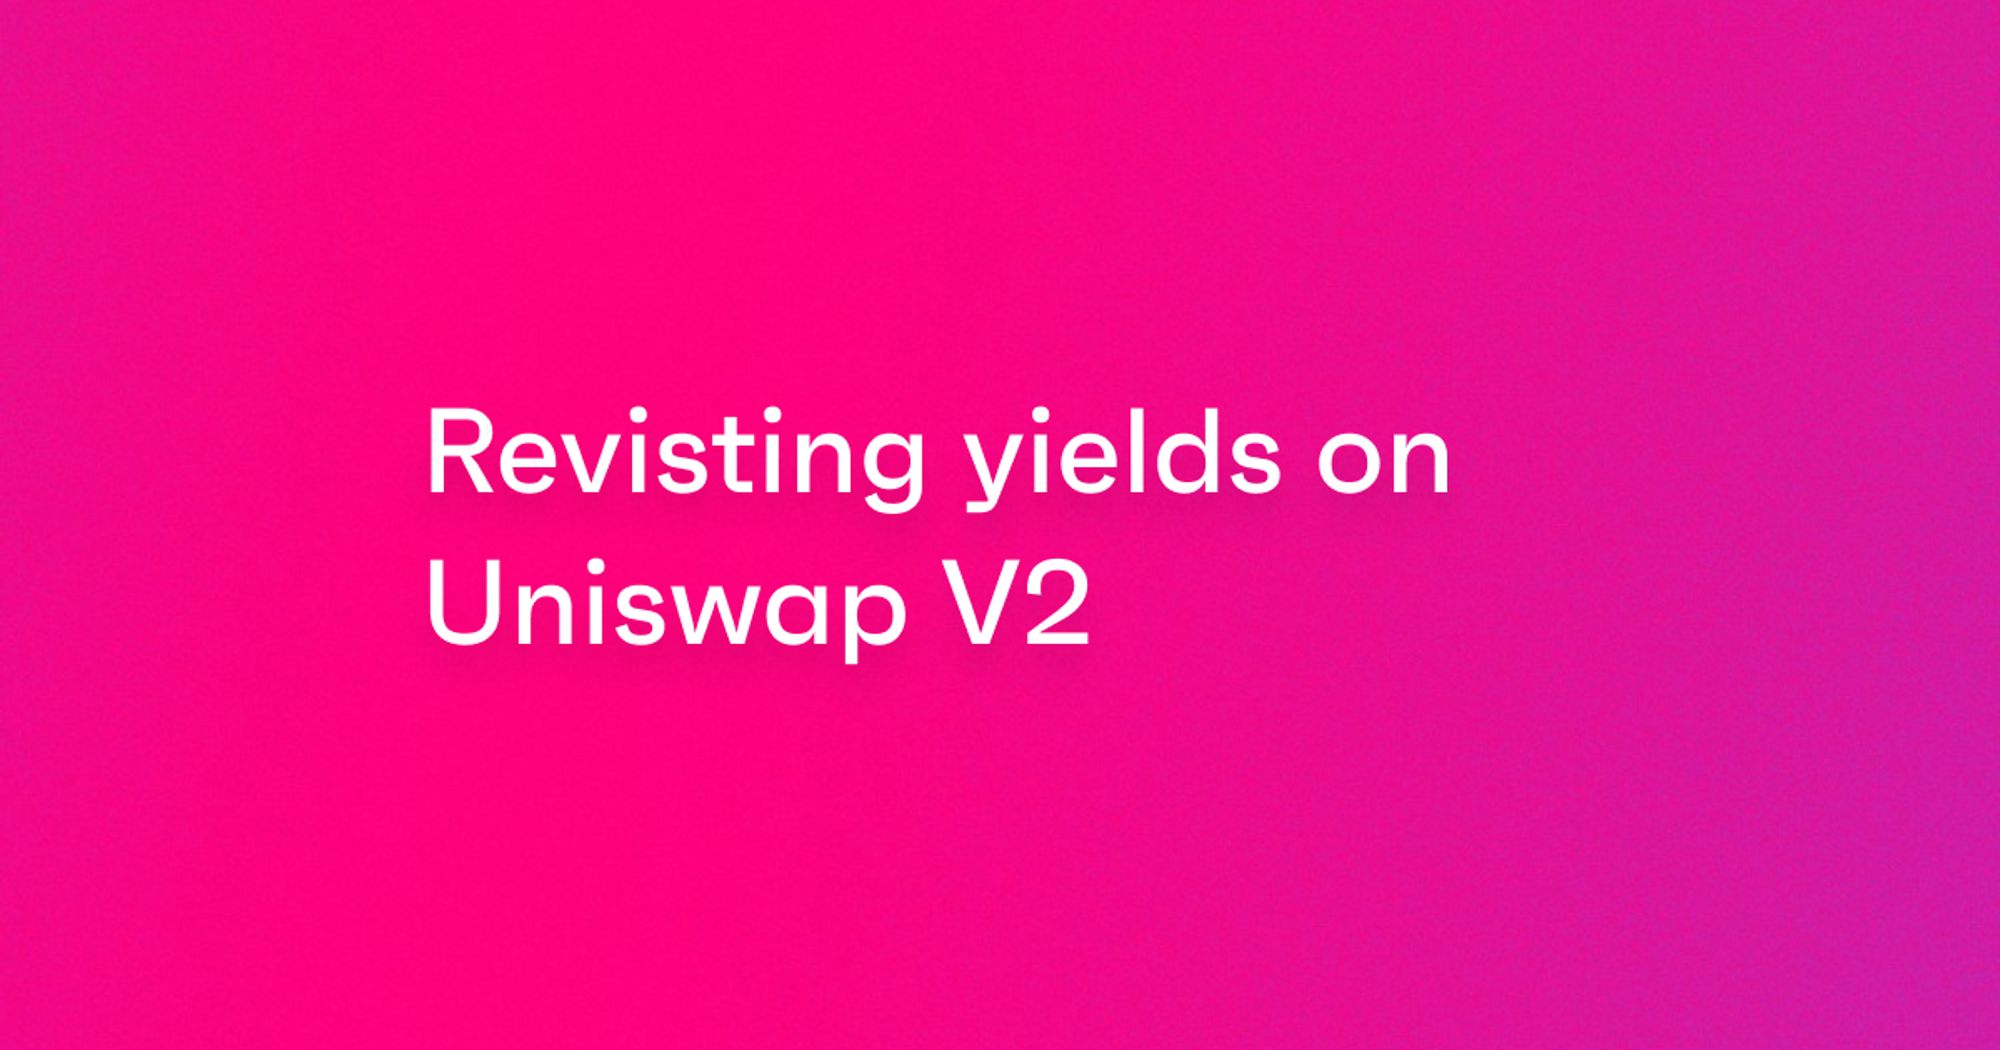 Revisiting yields on Uniswap V2 blog cover image